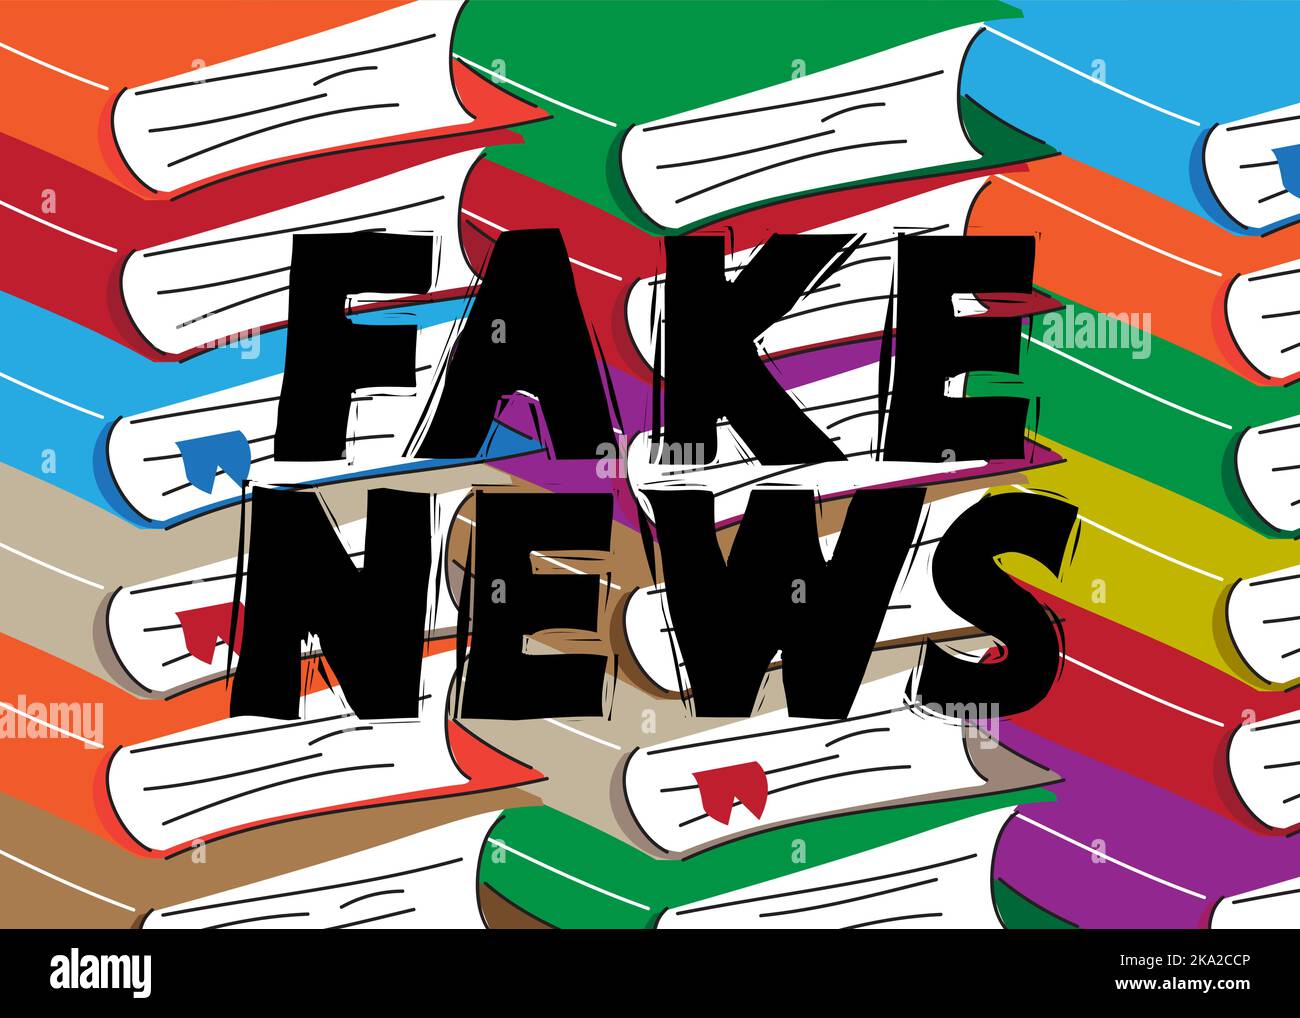 Fake News word on a book, cartoon vector illustration. Stock Vector